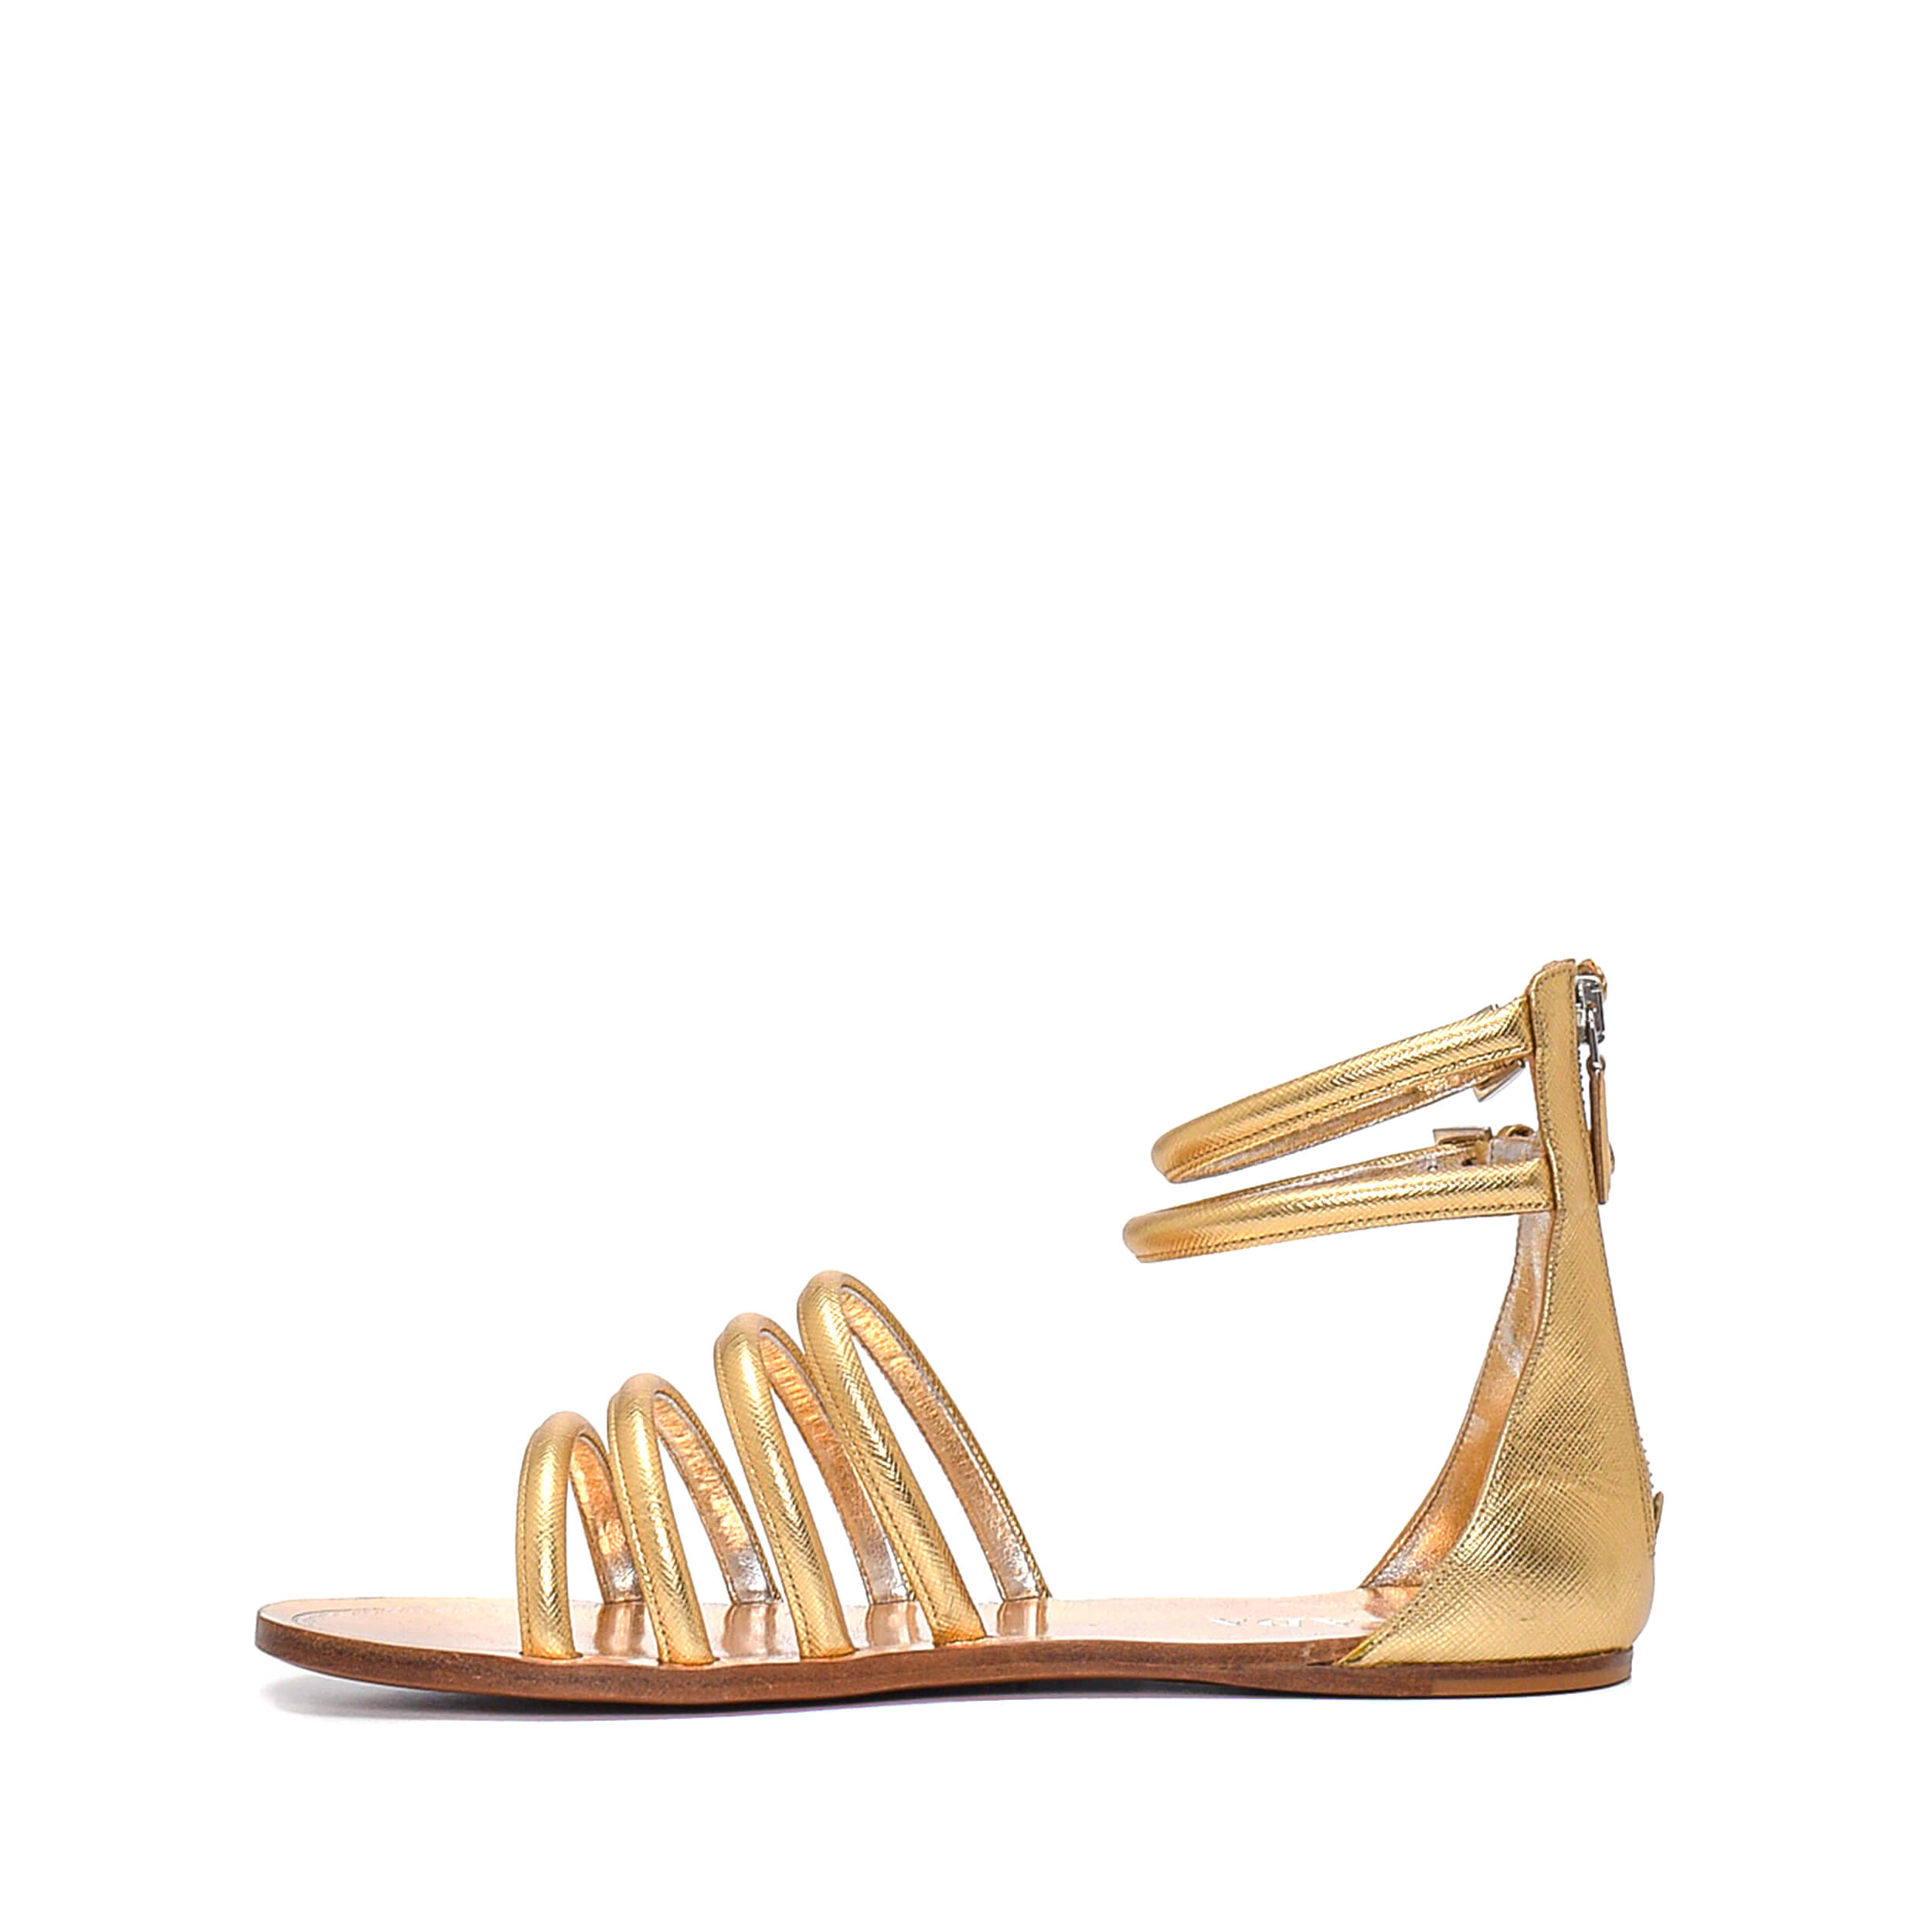 Prada - Gold Leather Gladiator Sandals